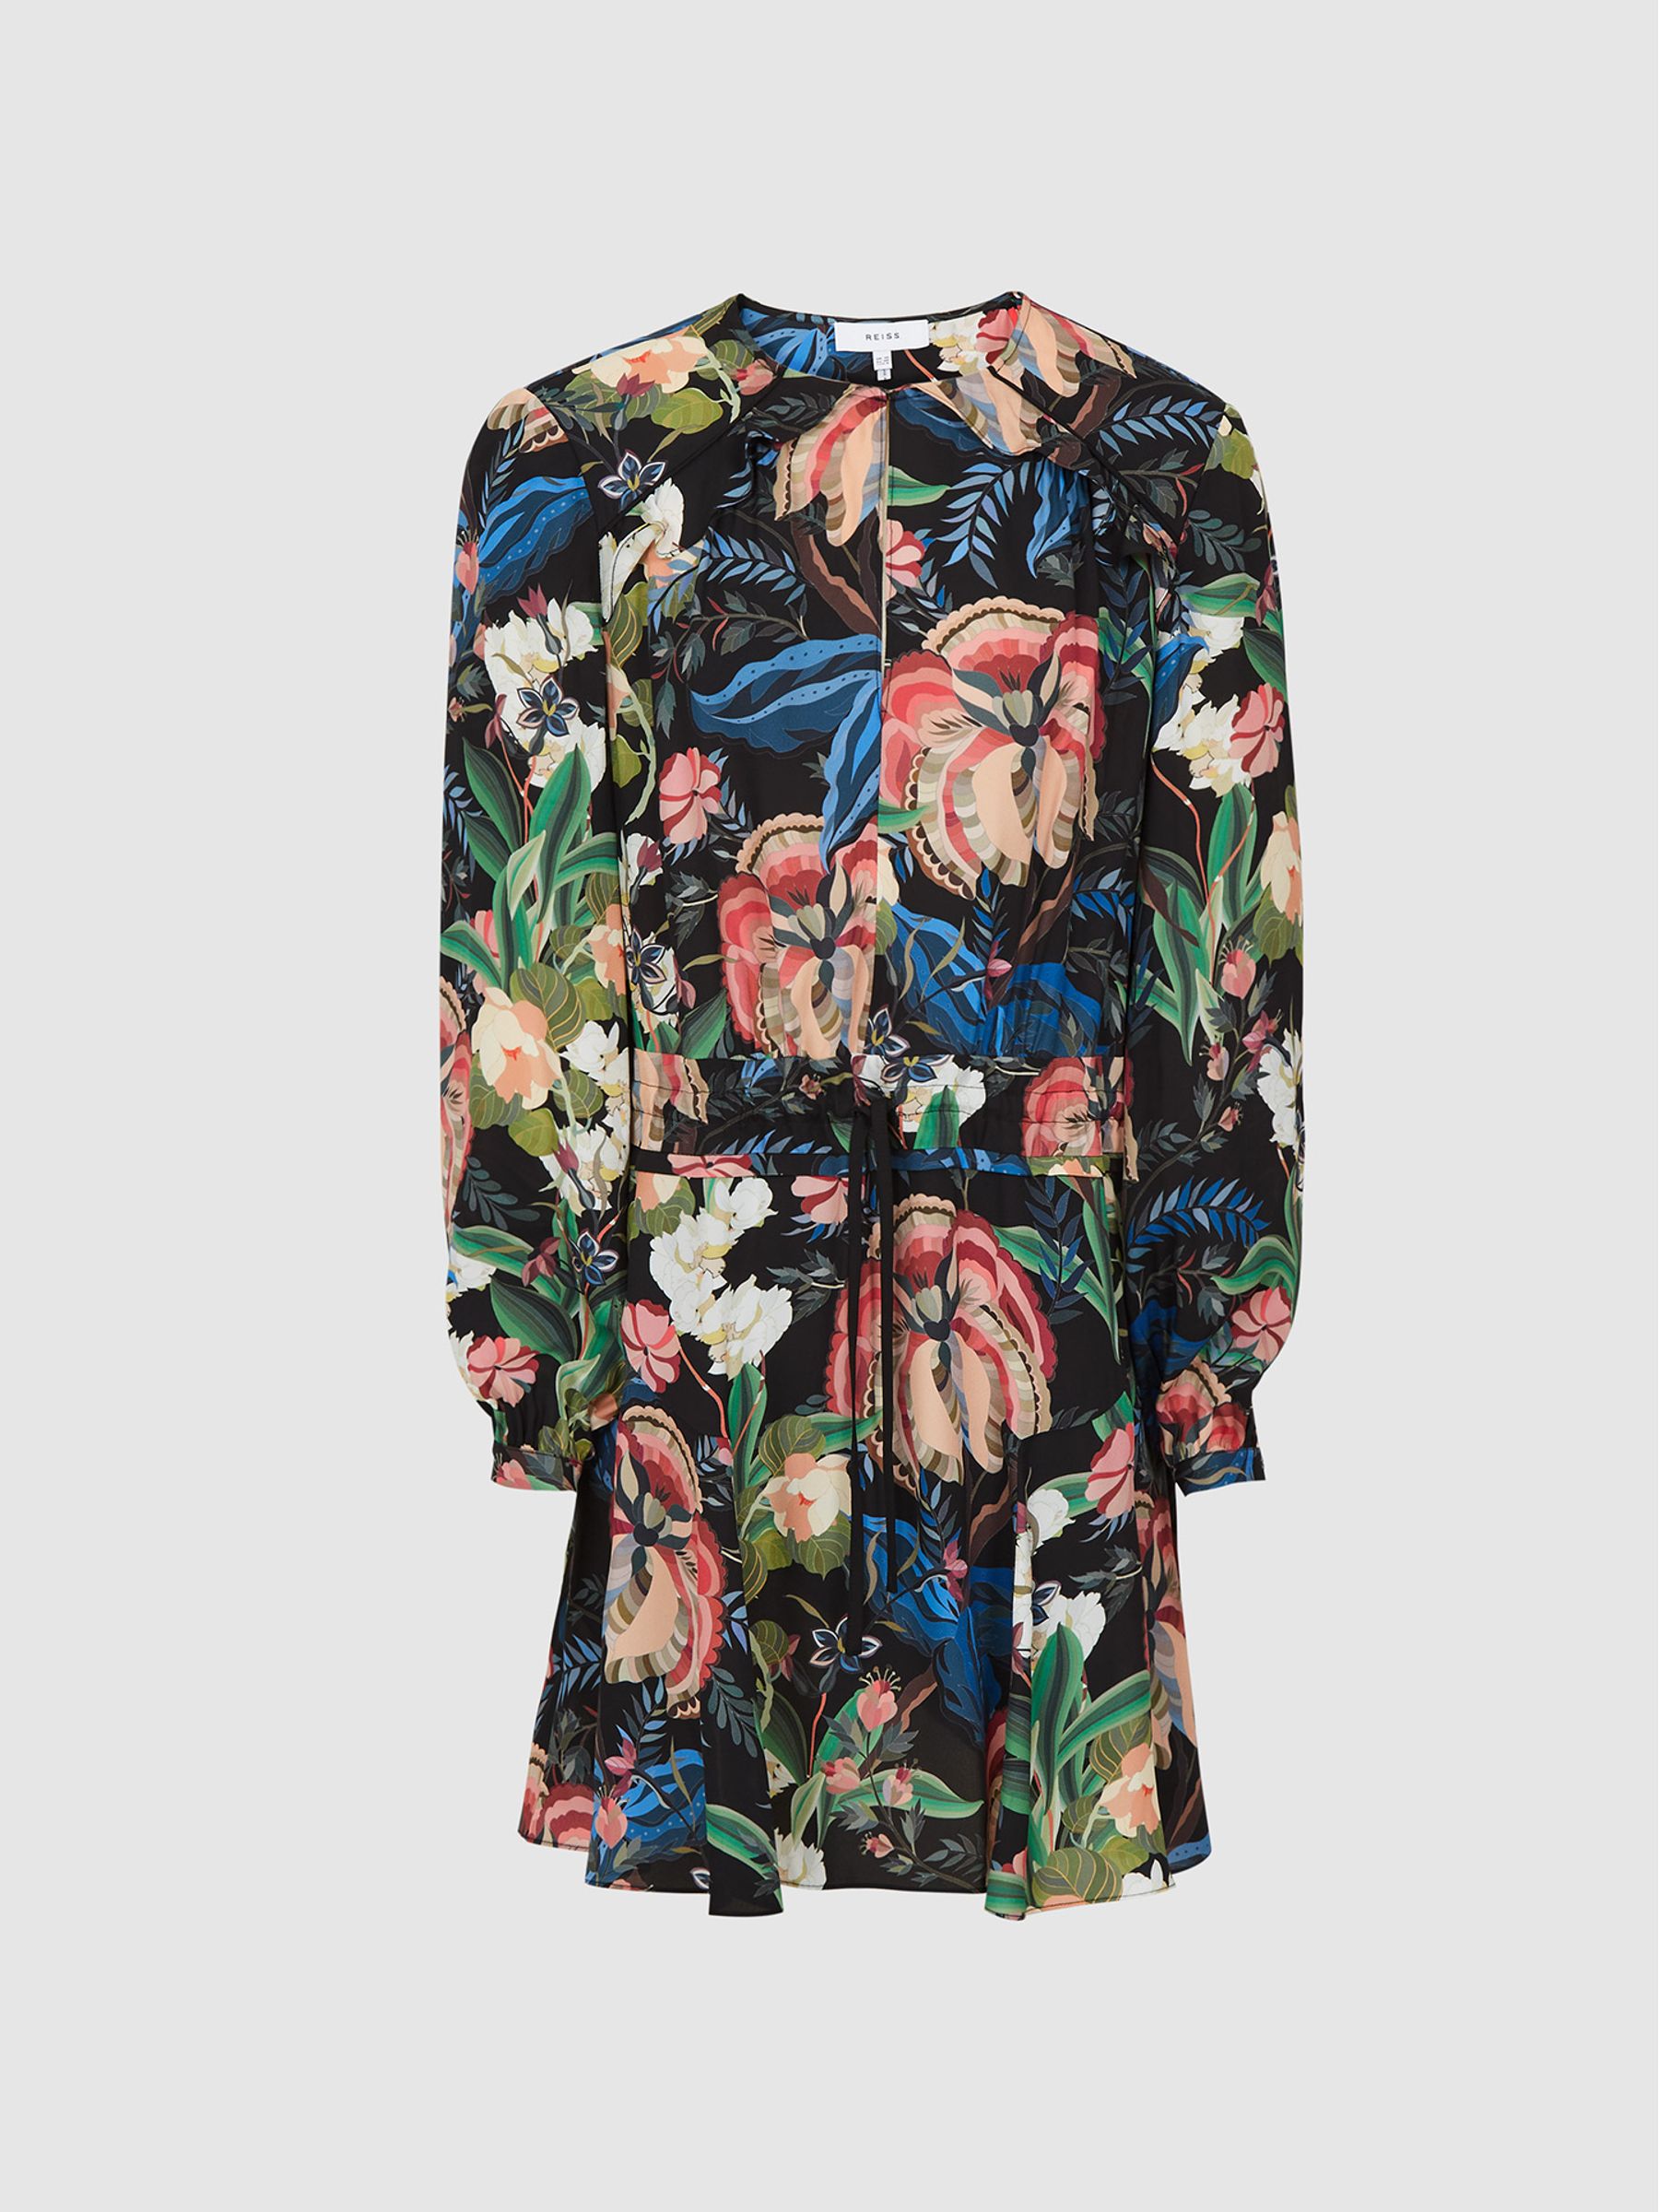 Reiss Alyssa Floral Print Flippy Dress - REISS